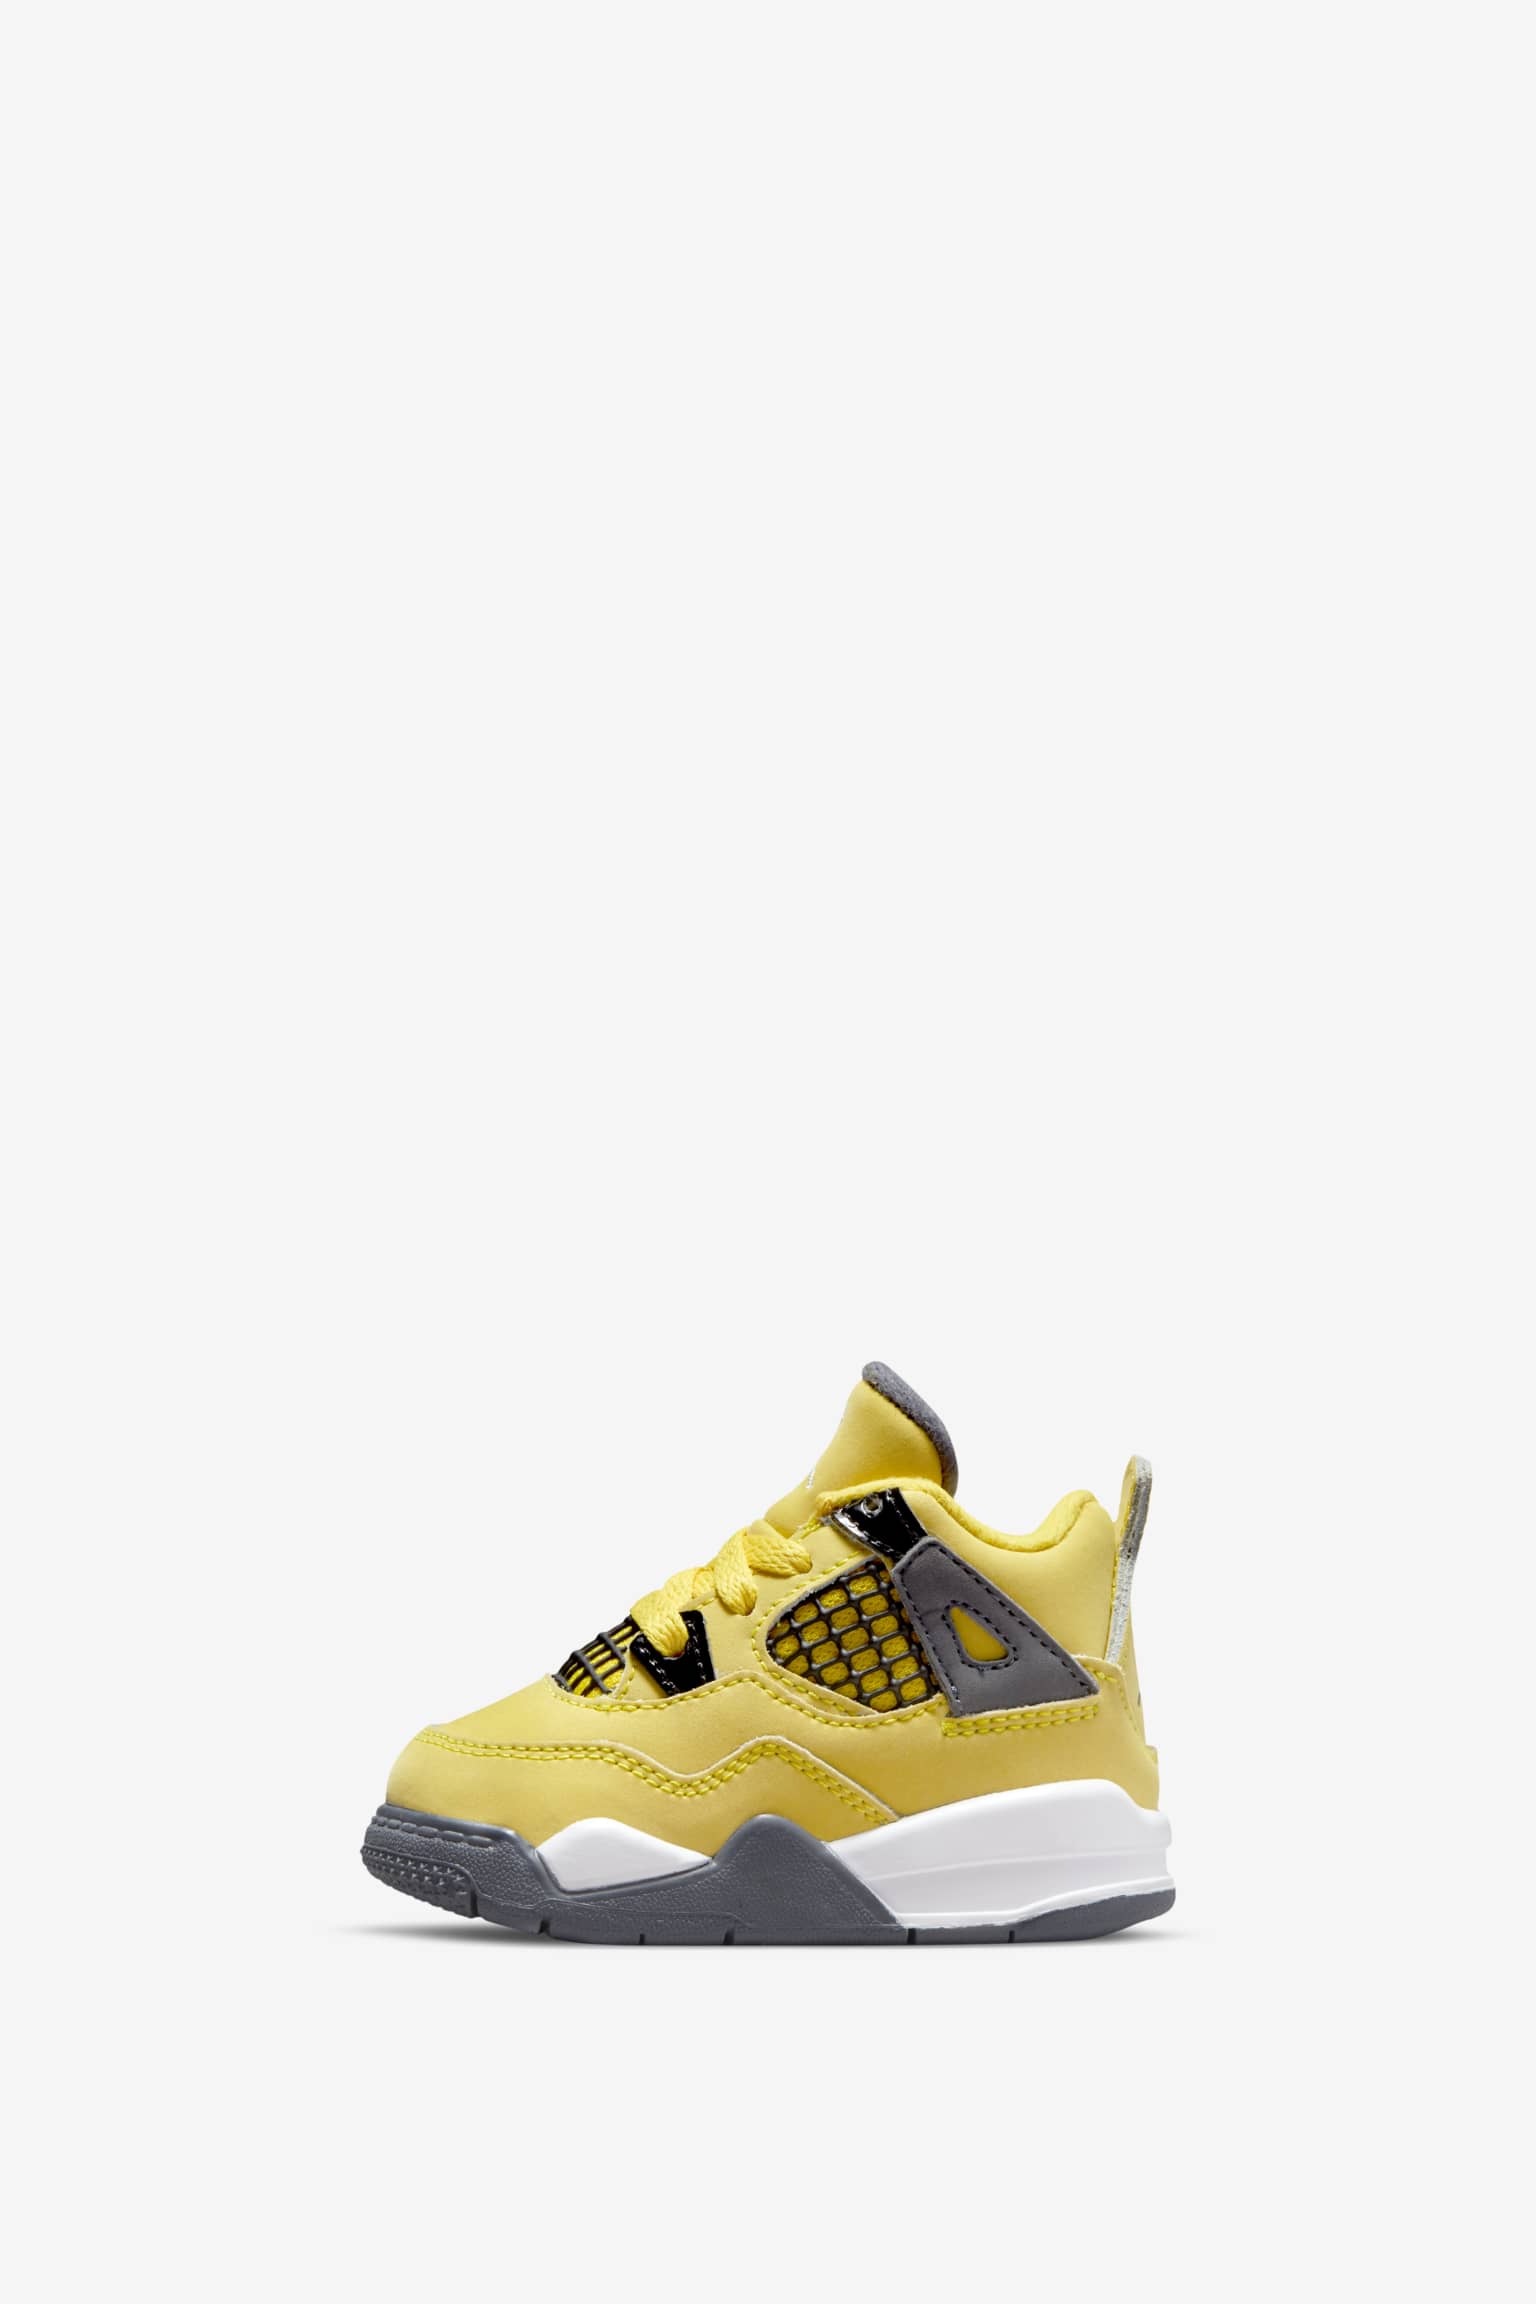 Air Jordan 4 'Tour Yellow' Release Date. Nike SNKRS MY التجهيزات العسكرية